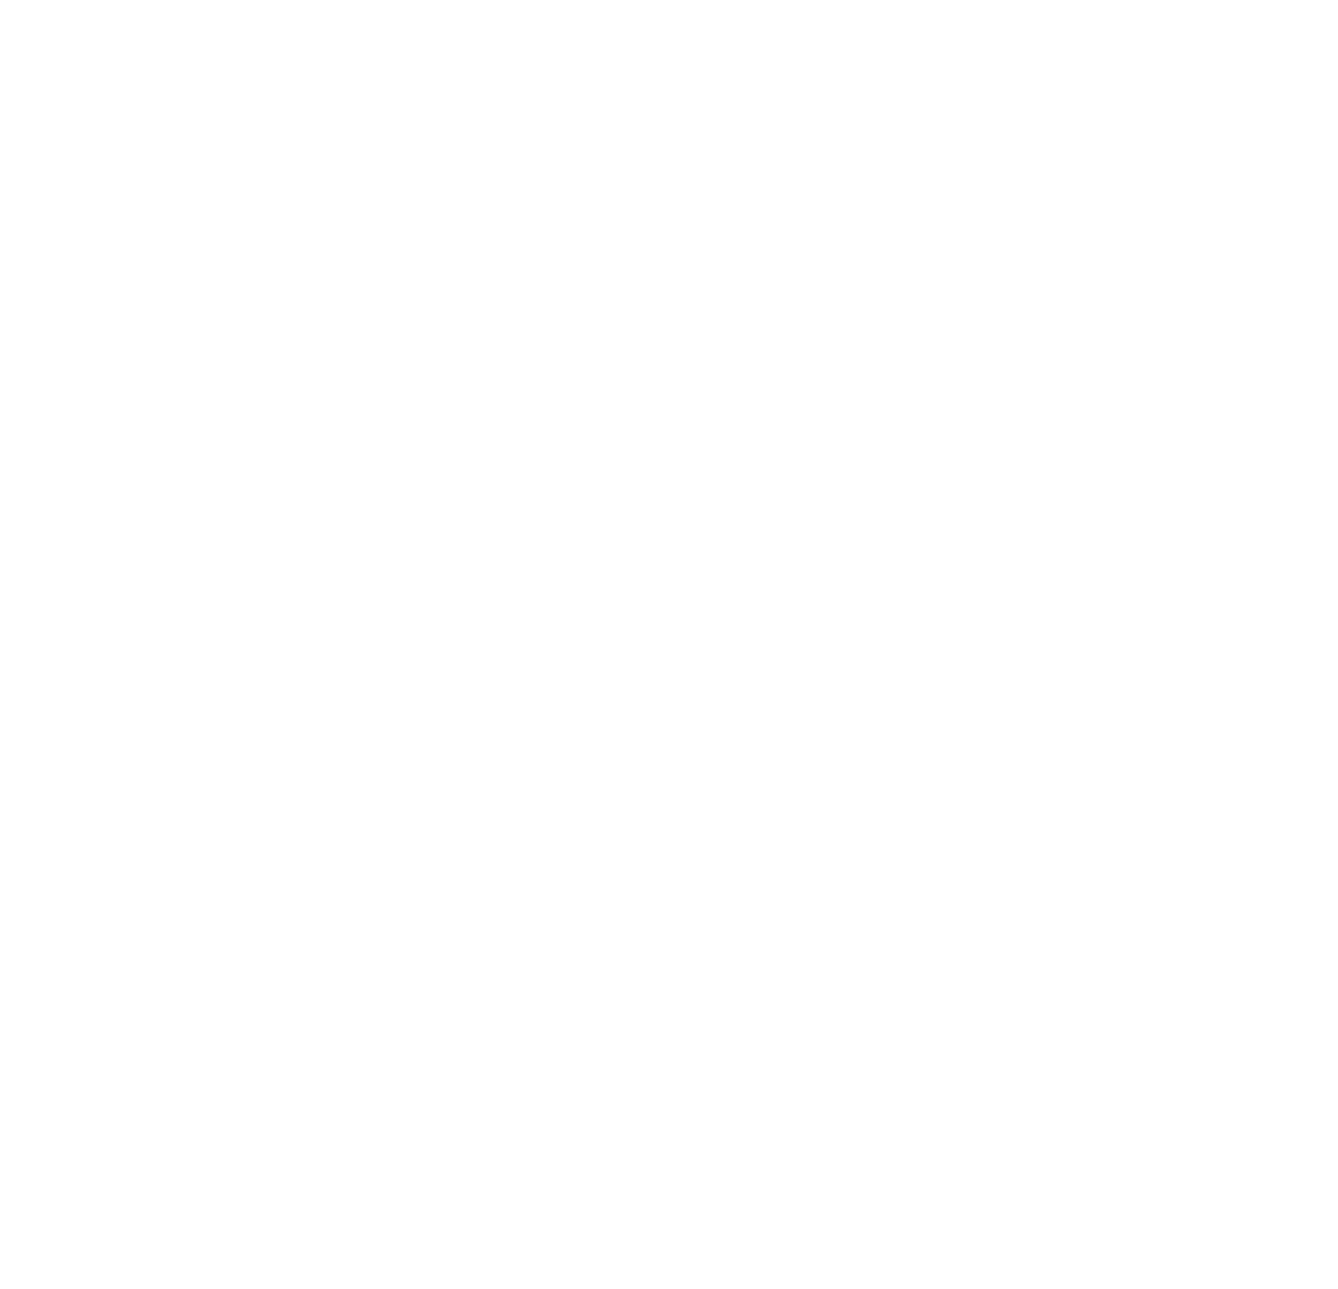 Natalie Hinds